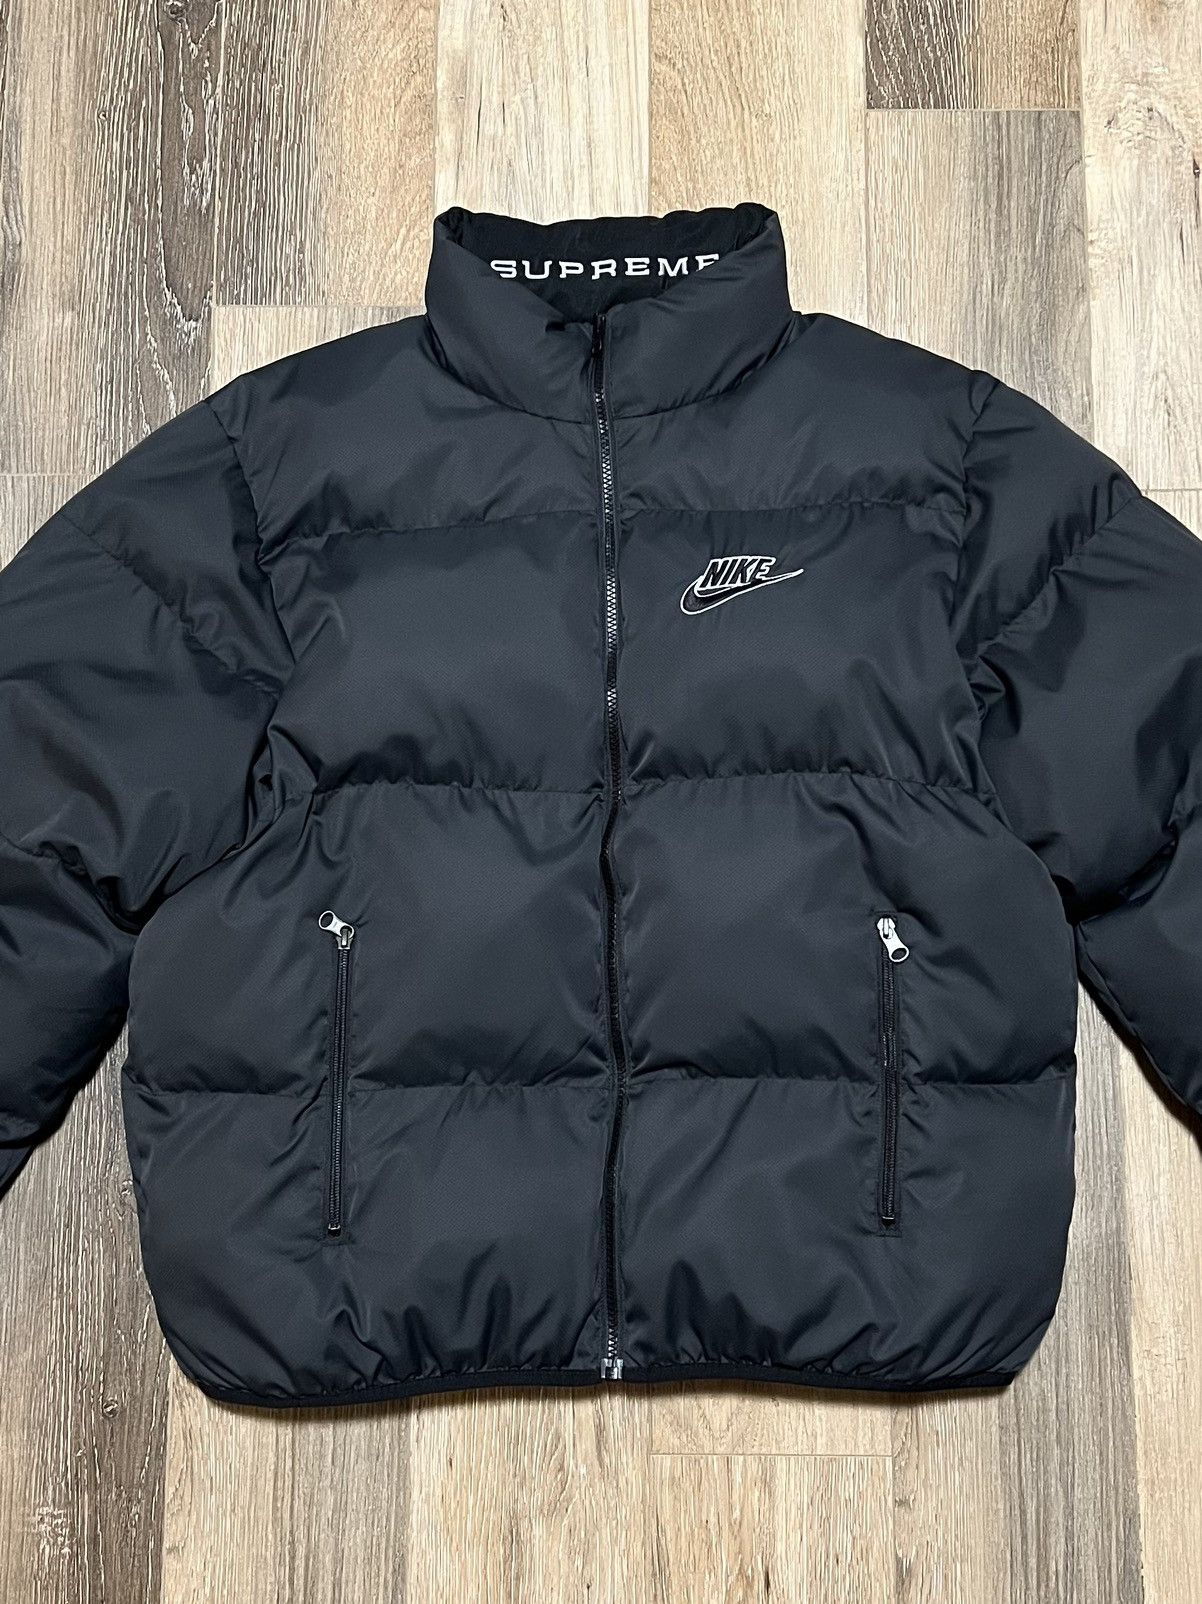 Supreme Supreme Nike Reversible Puffy Jacket | Grailed